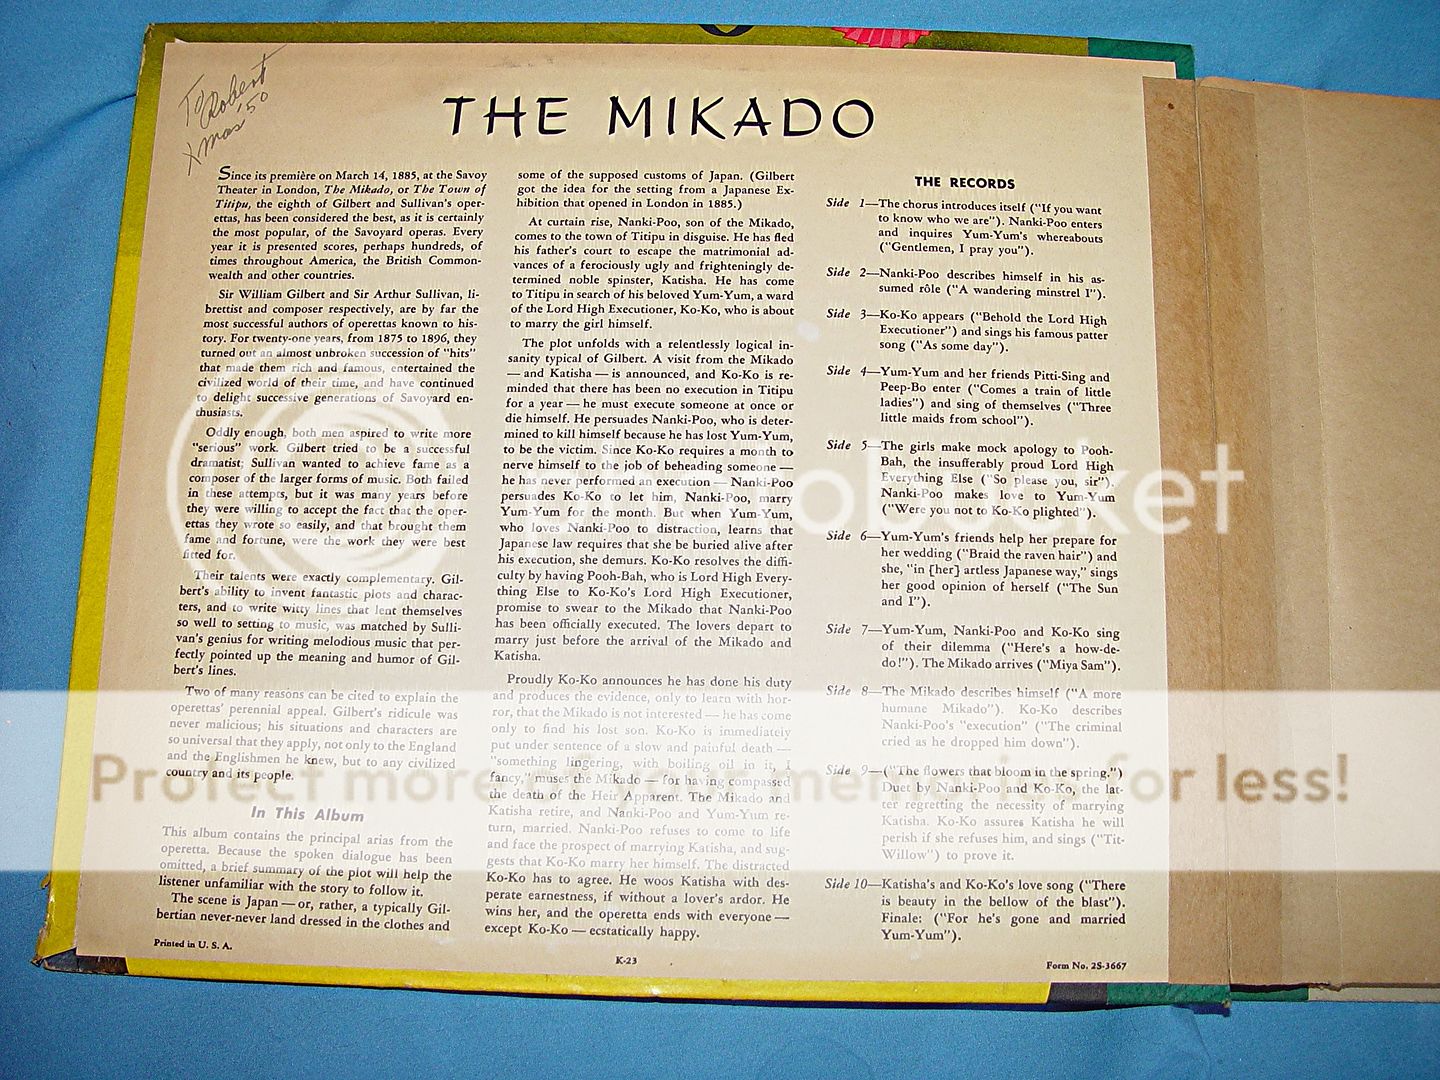 THE MIKADO 78 rpm SET GILBERT & SULLIVAN AL GOODMAN RCA VICTOR RECORDS 